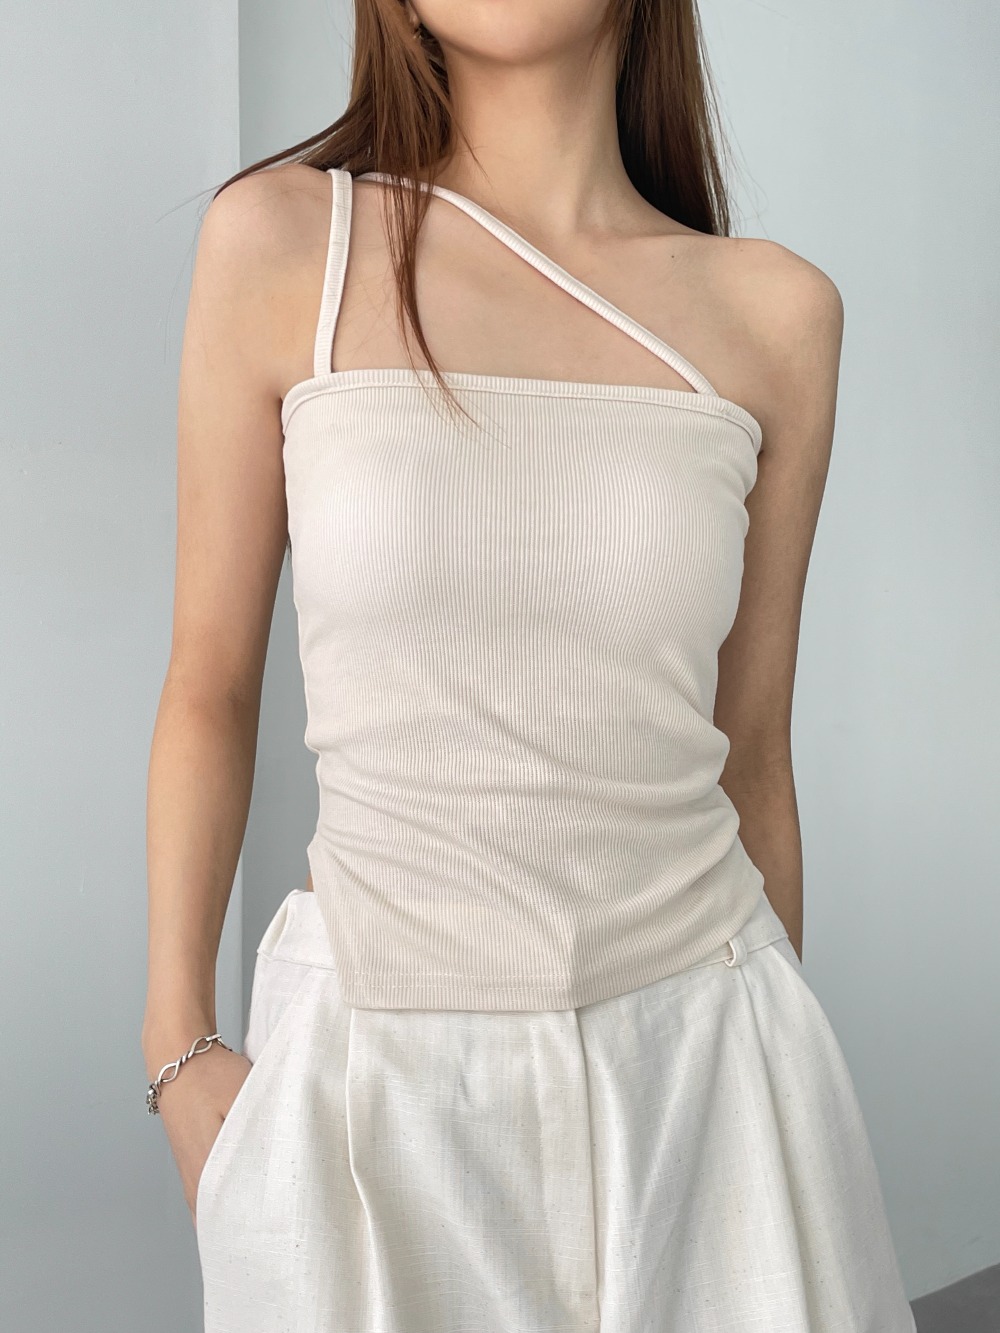 unbalance cap sleeveless (3color)